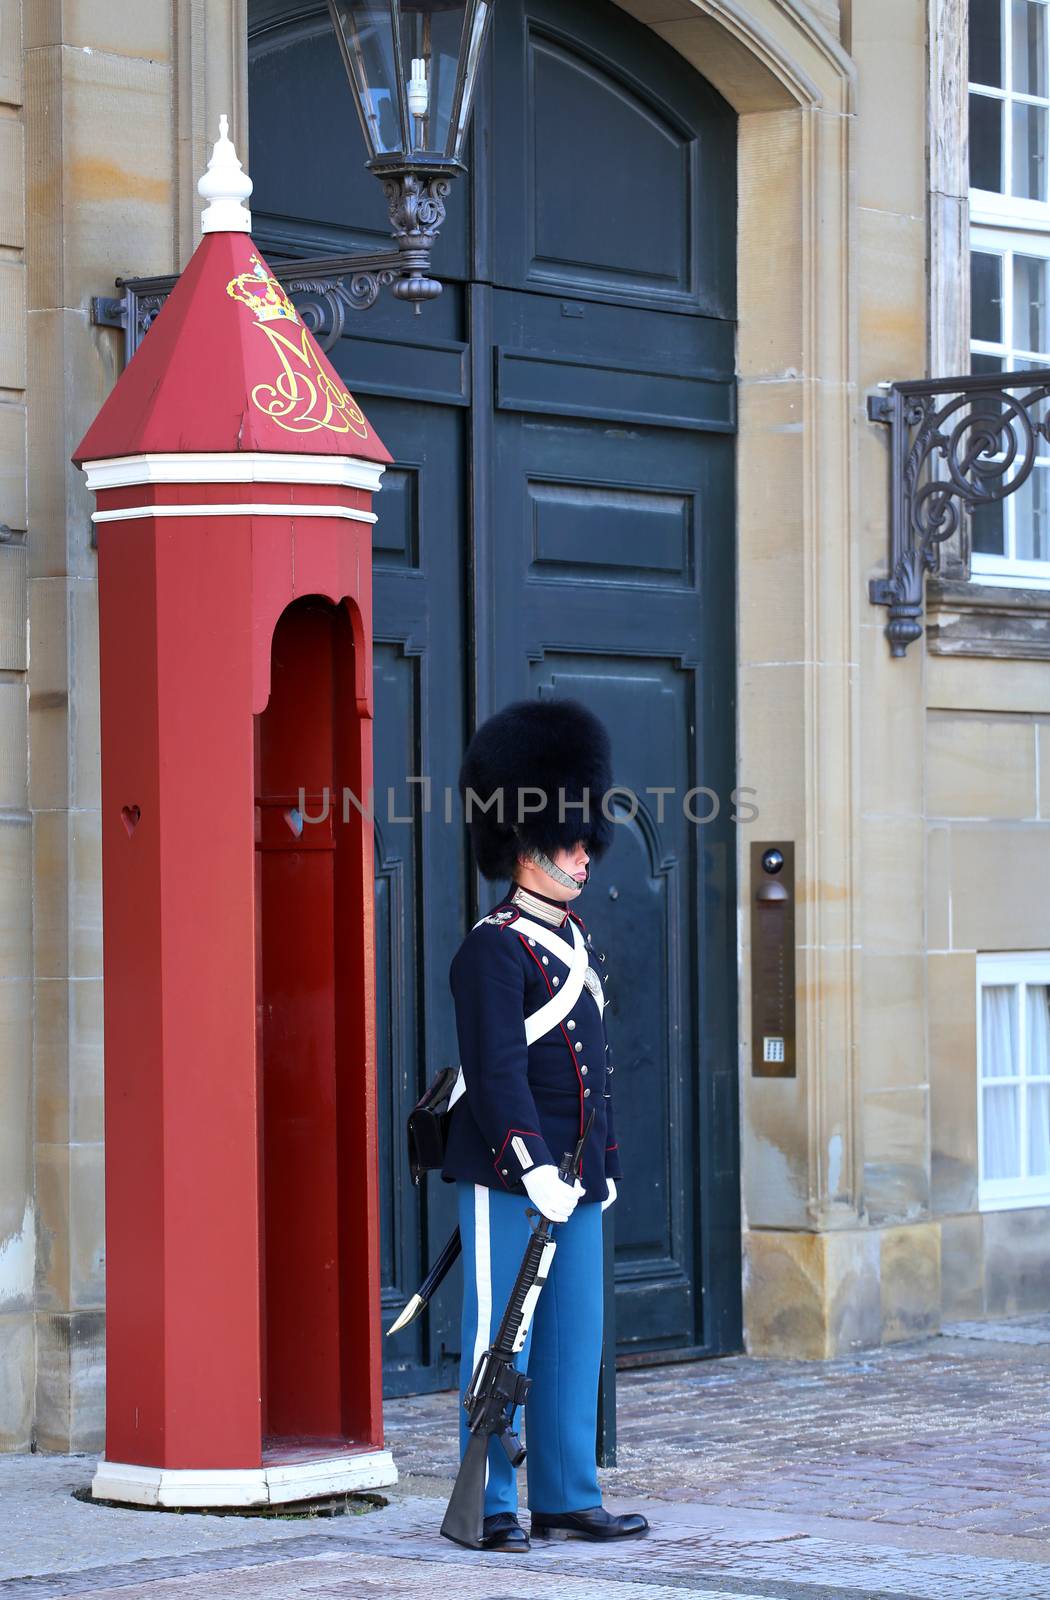 COPENHAGEN, DENMARK - AUGUST 15, 2016: Danish Royal Life Guard on the central plaza of Amalienborg palace, home of the Danish Royal family in Copenhagen, Denmark on August 15, 2016.